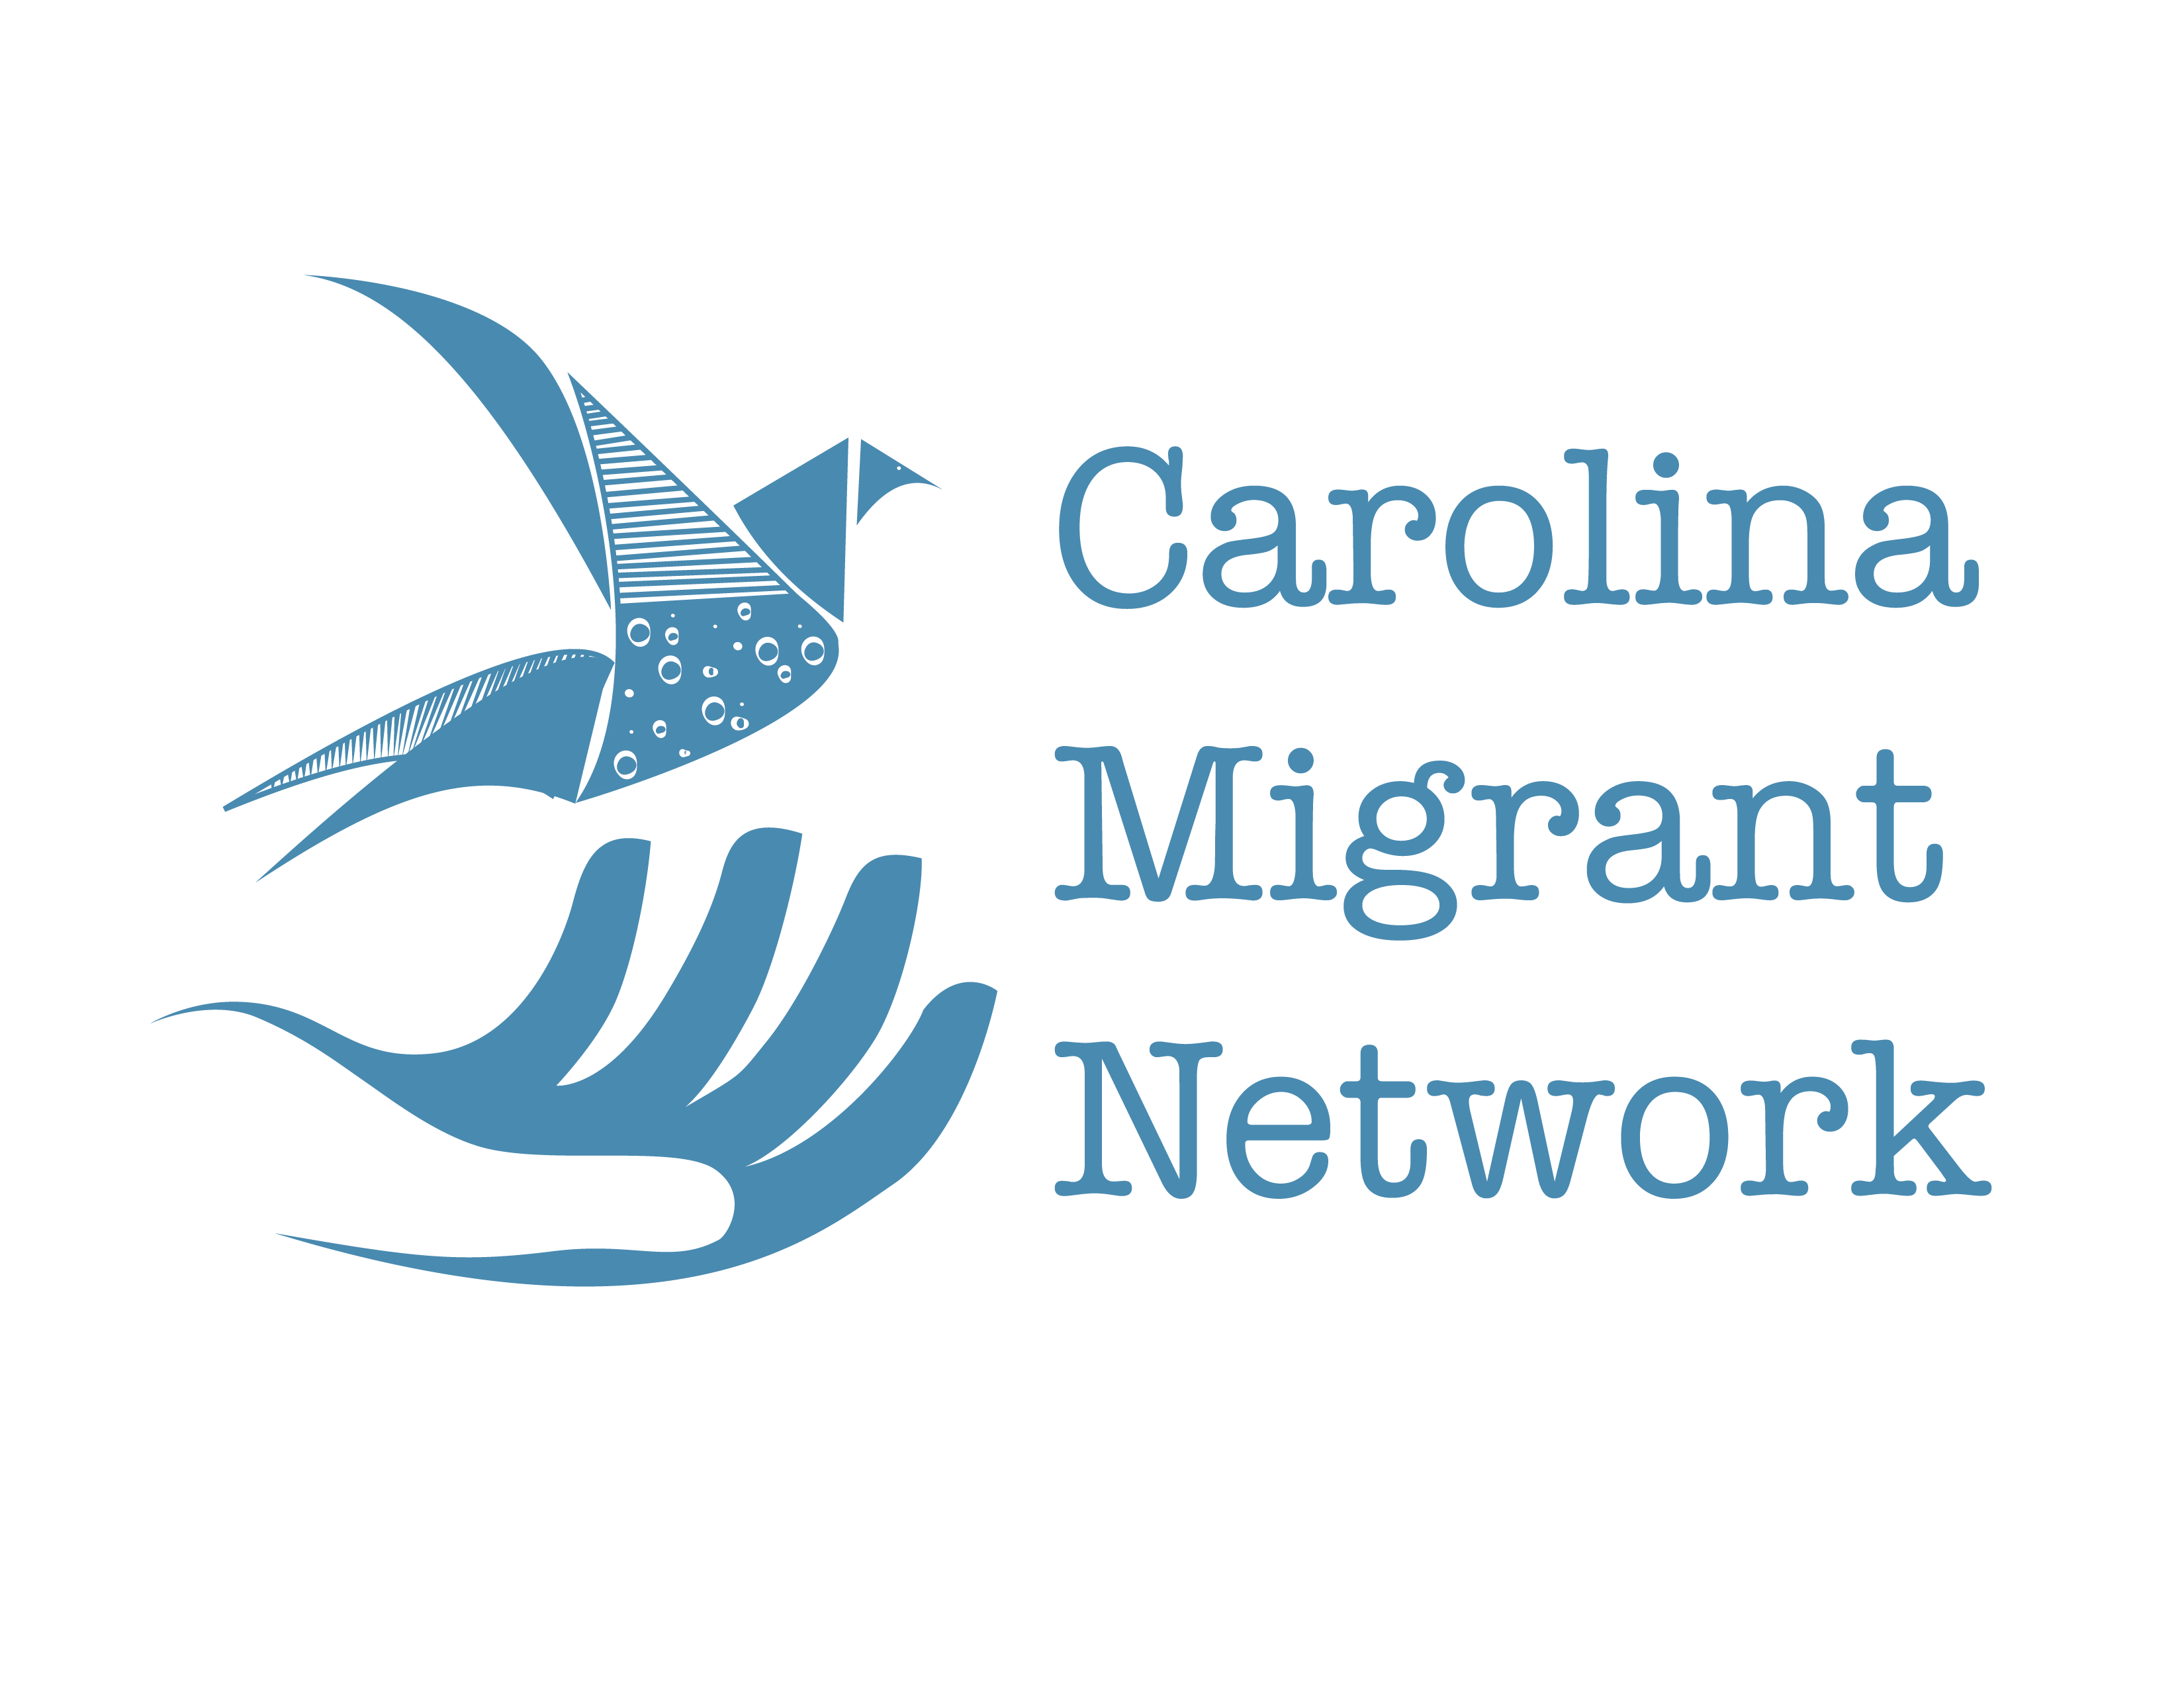 Carolina Migrant Network